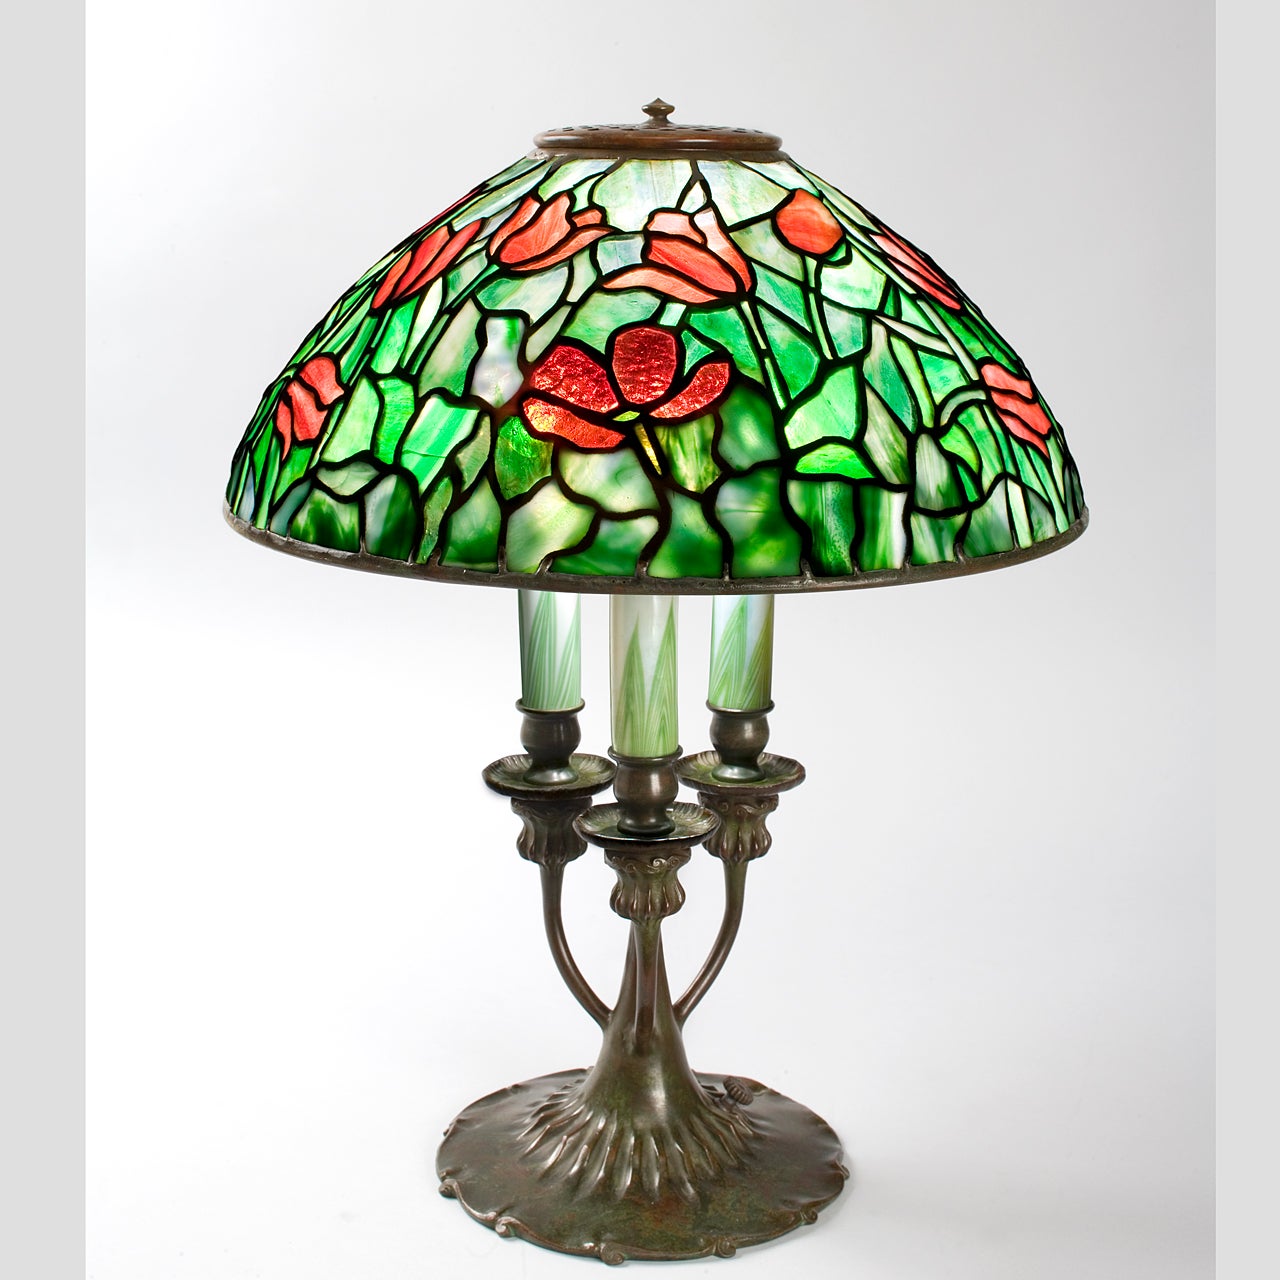 Tiffany Studios "Tulip" Lamp